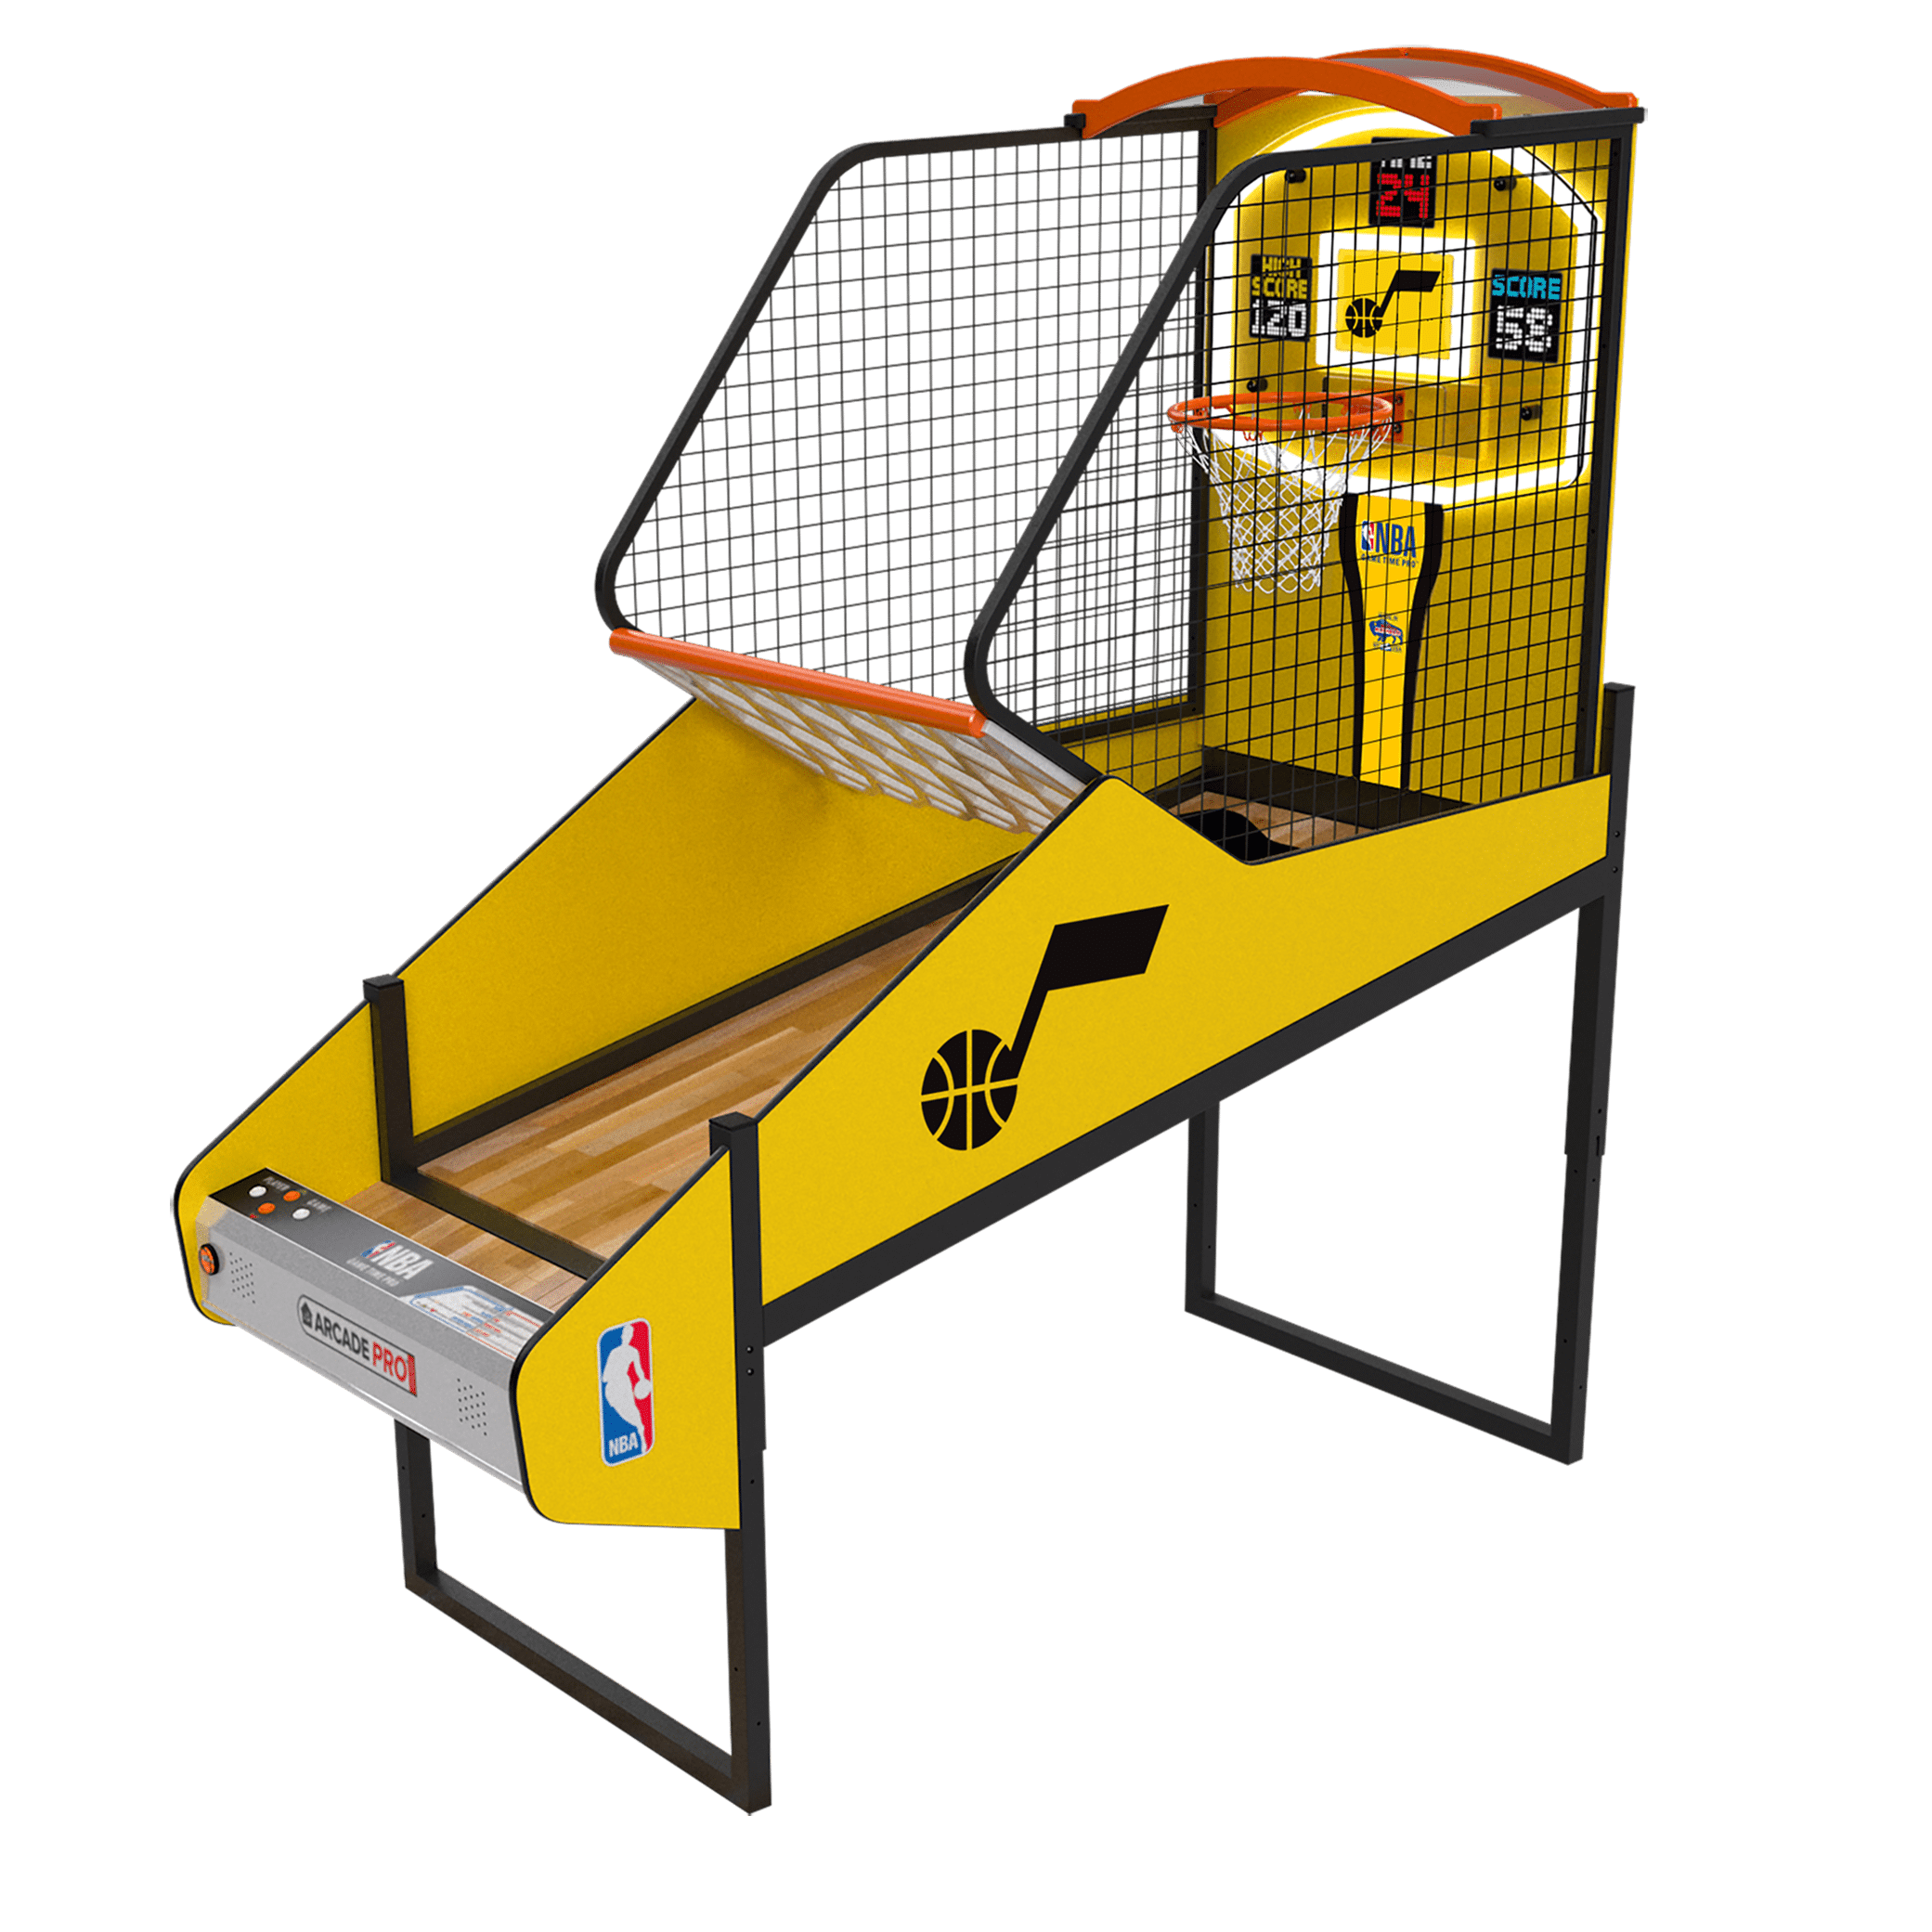 Utah Jazz NBA Game Time Pro Basketball Home Arcade Game with six 9